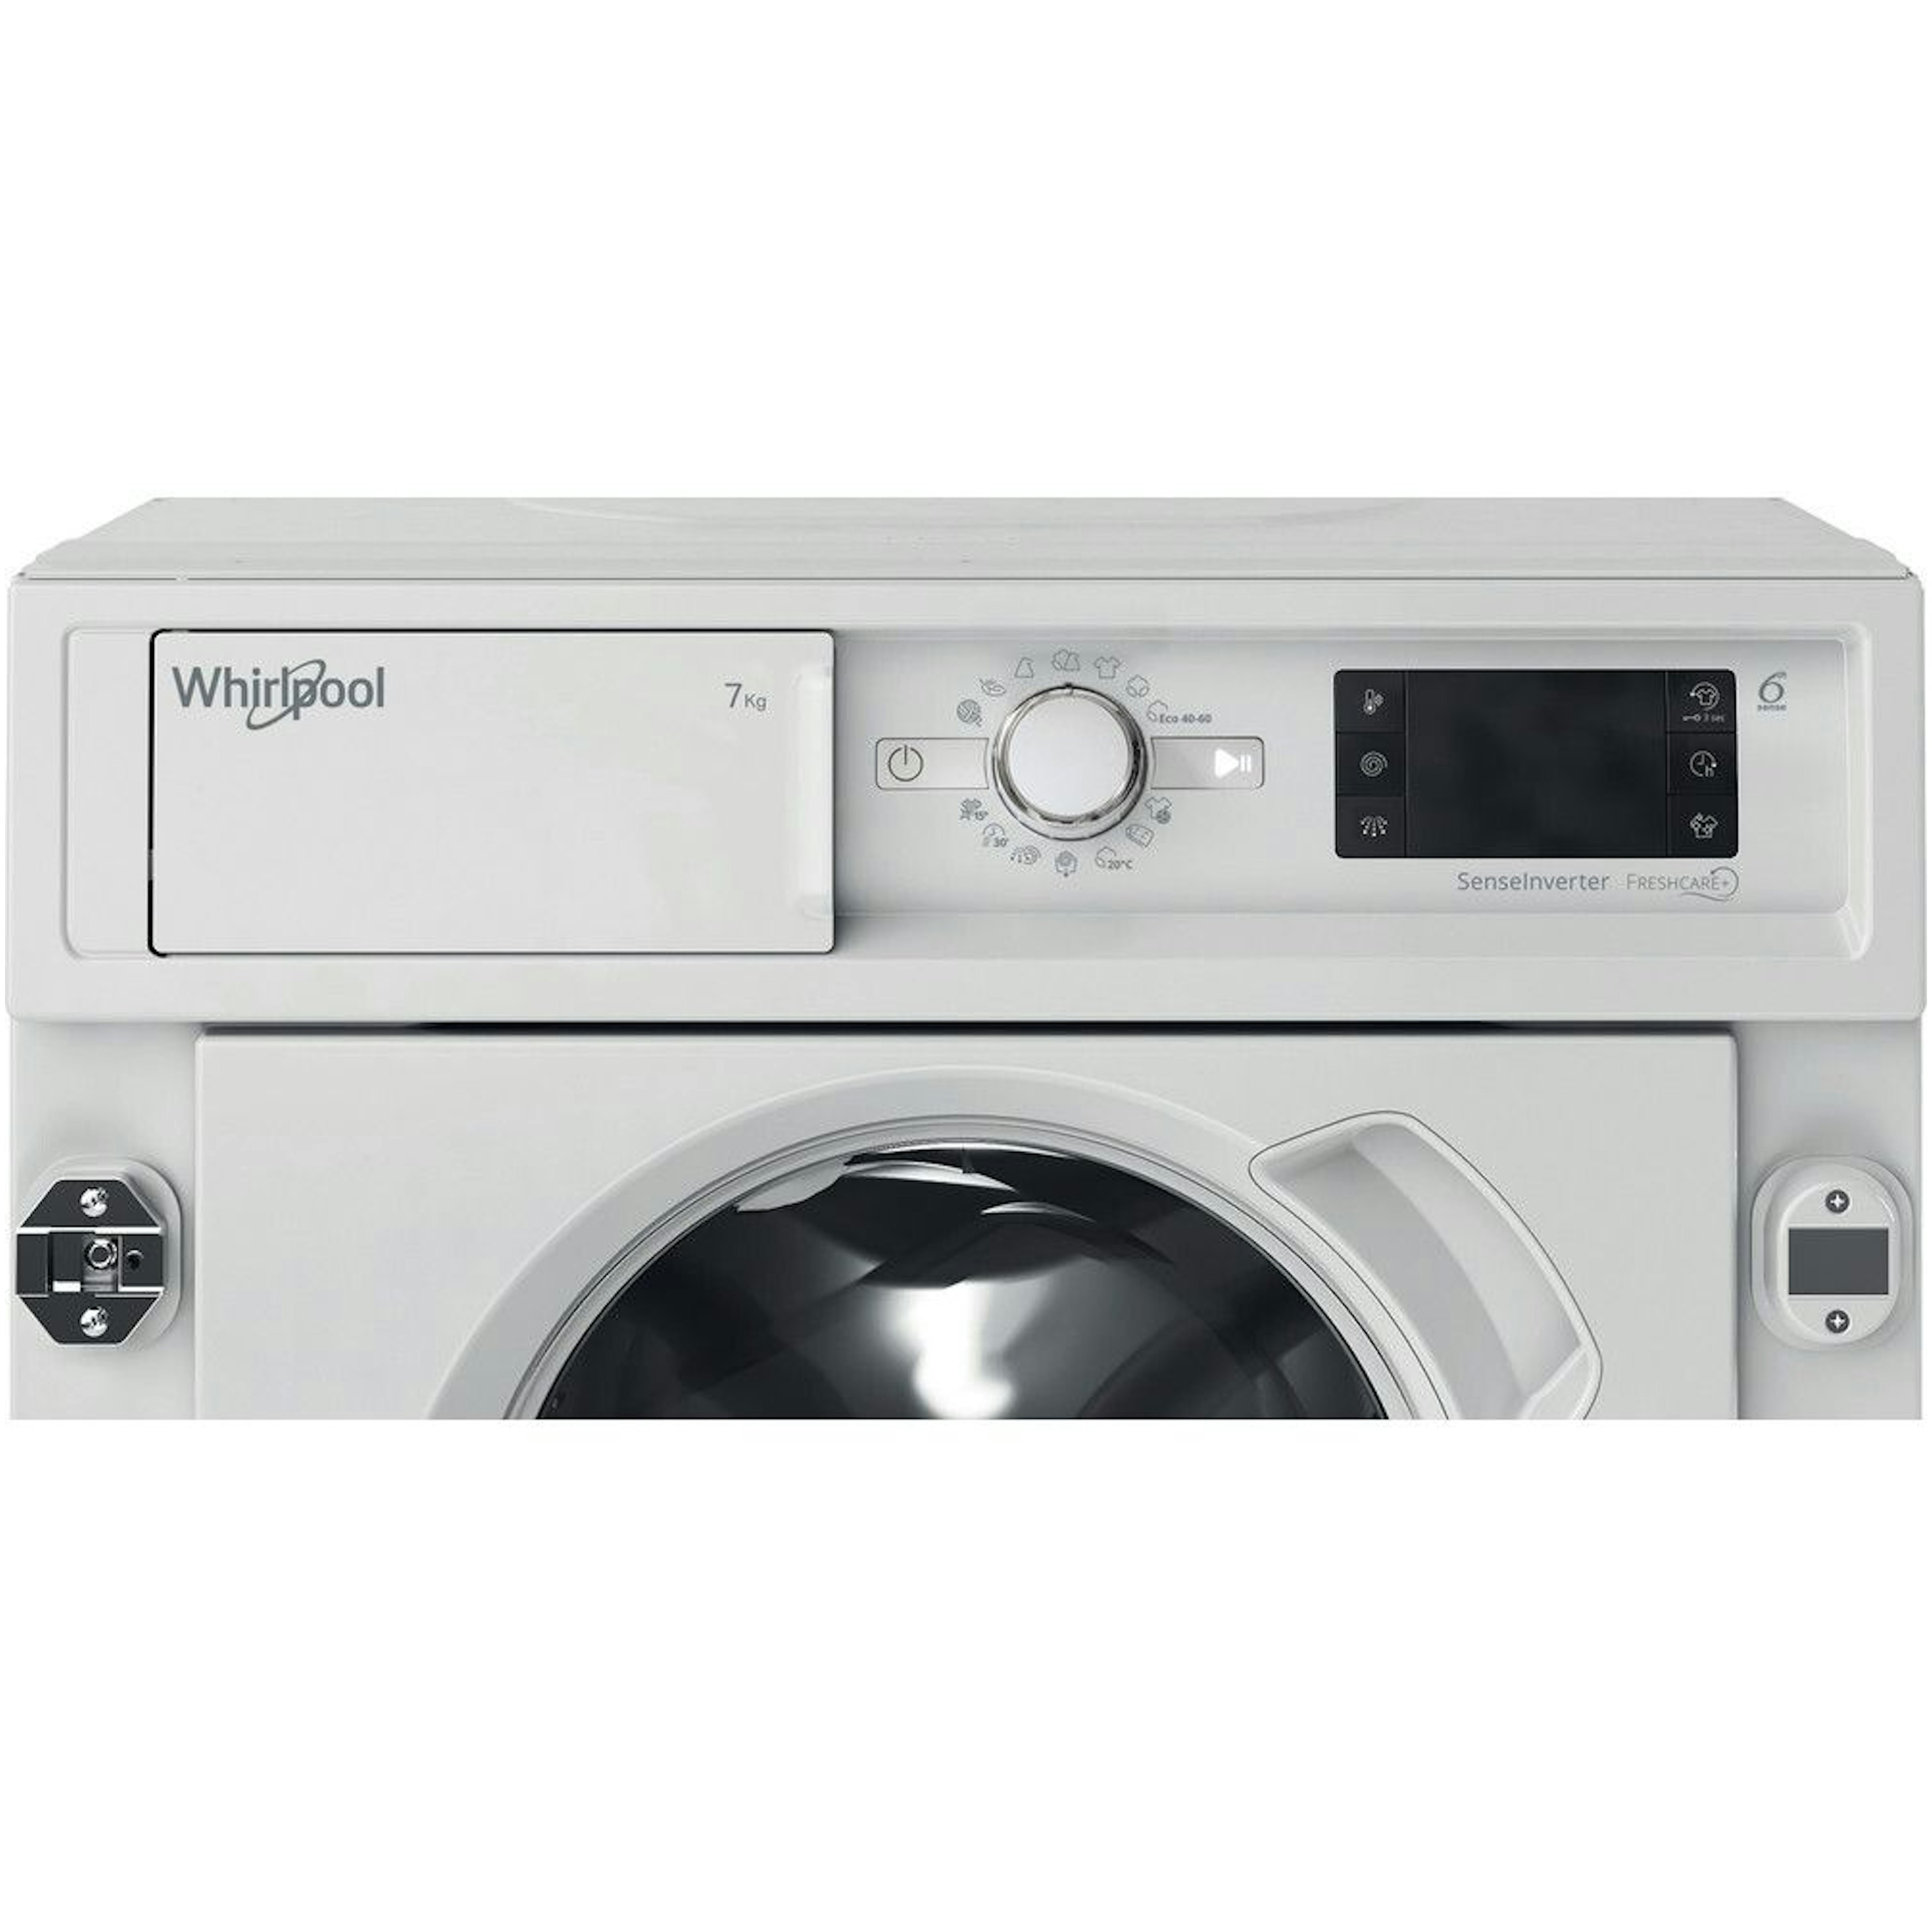 Whirlpool wasmachine BIWMWG71483EEUN afbeelding 3